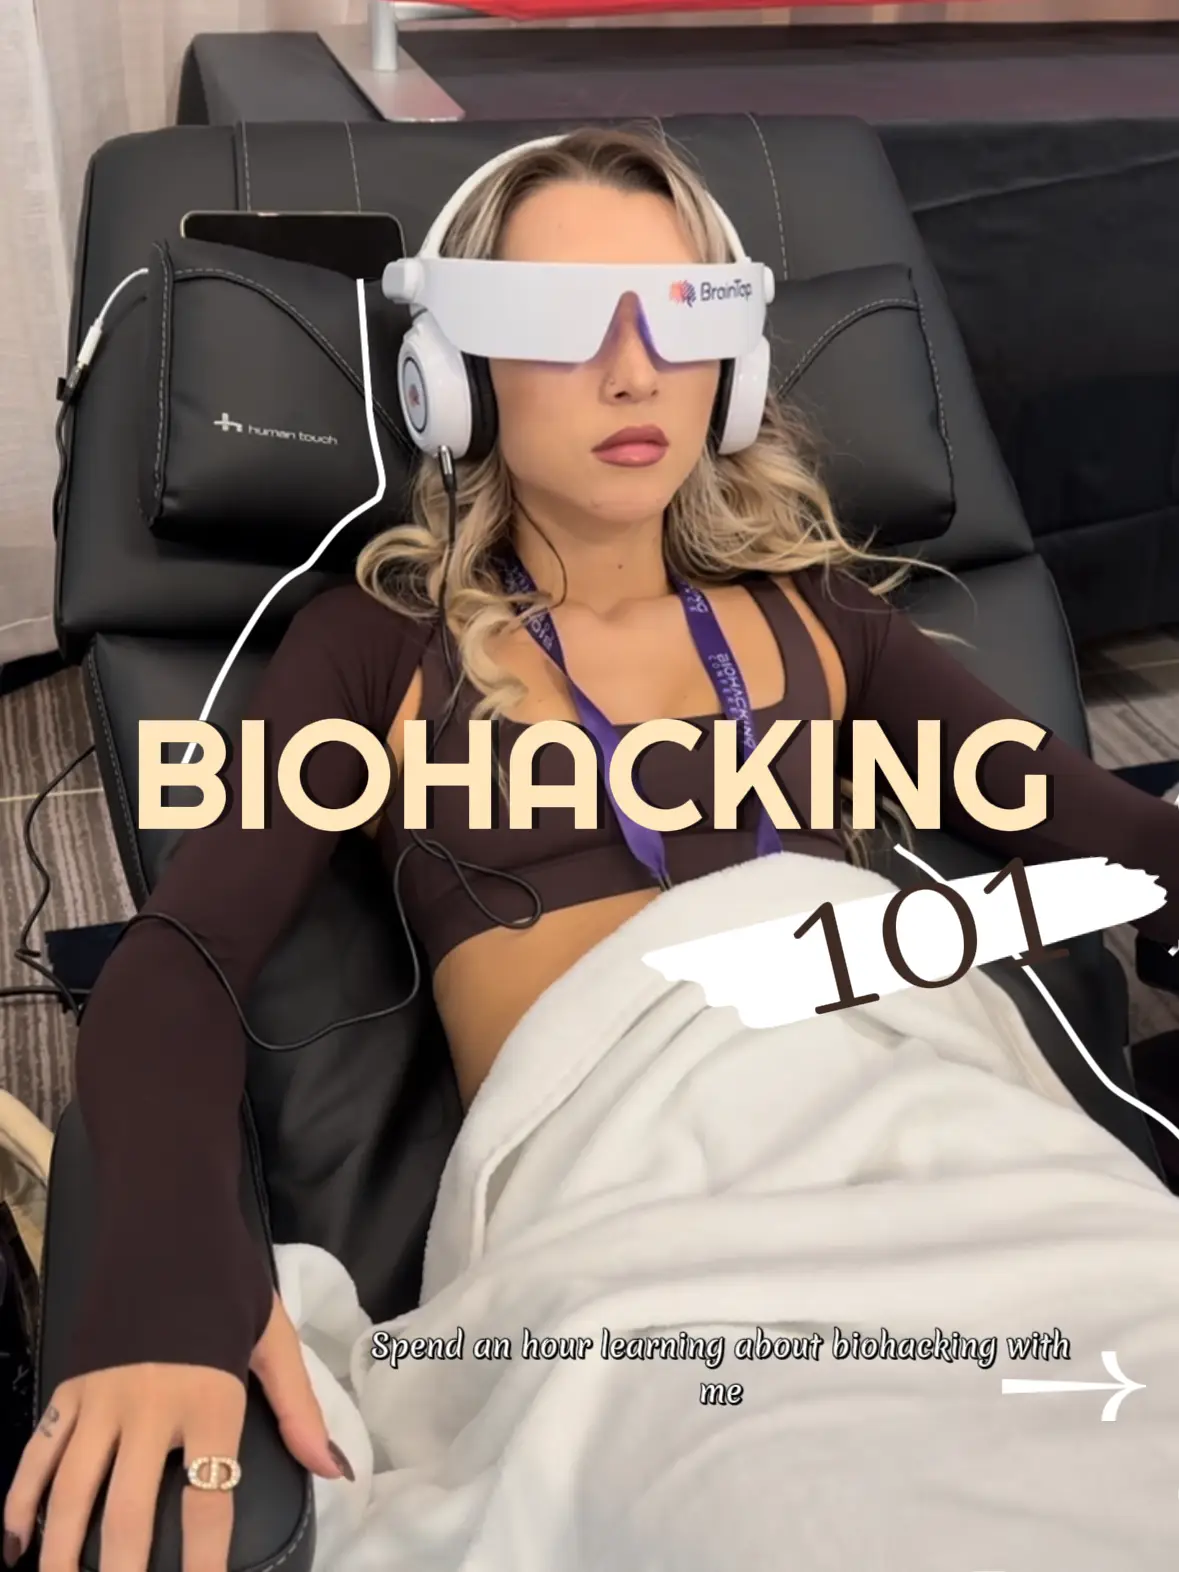 paleo chair - Next Level Biohacking